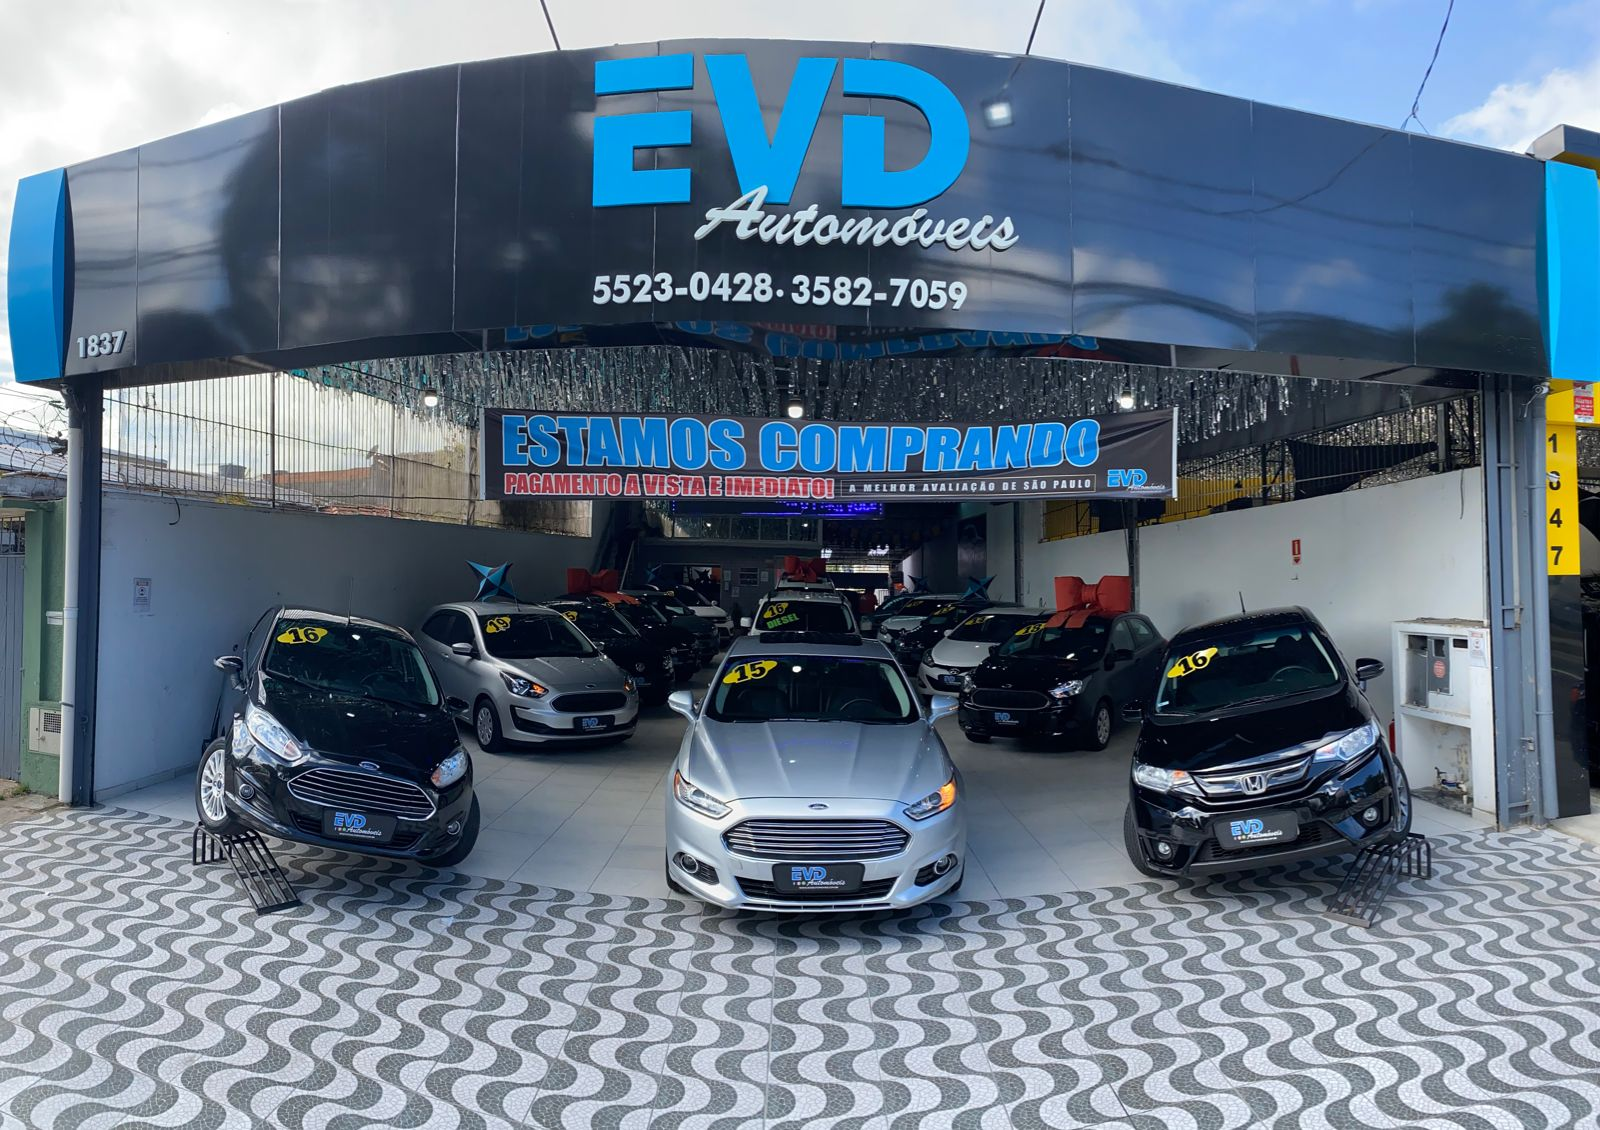 Fachada da loja Evd Automóveis - São Paulo - SP